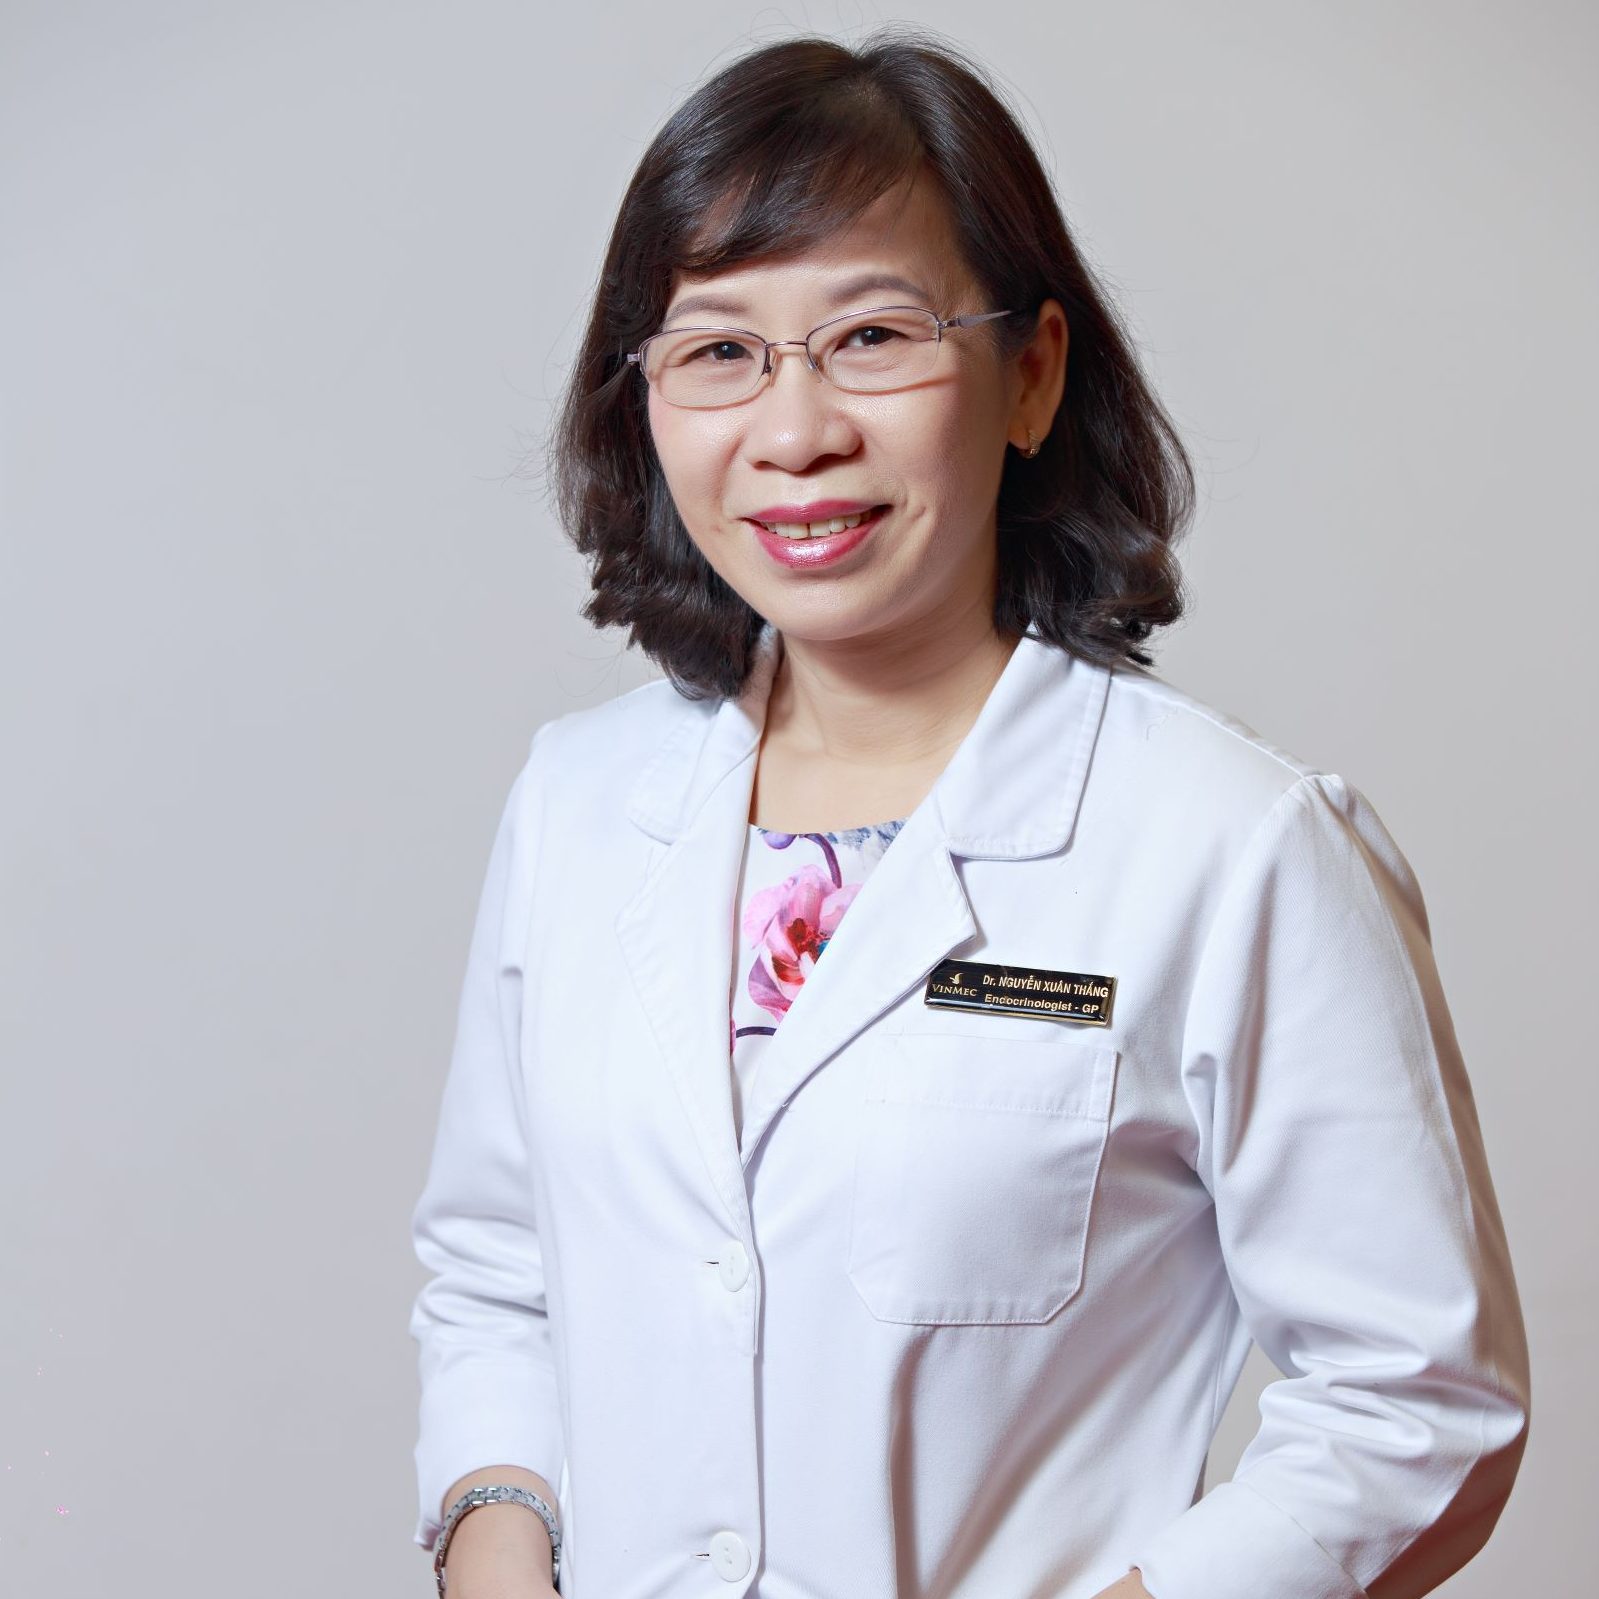 Nguyen Xuan Thang, MD – SPECIALIST LEVEL II